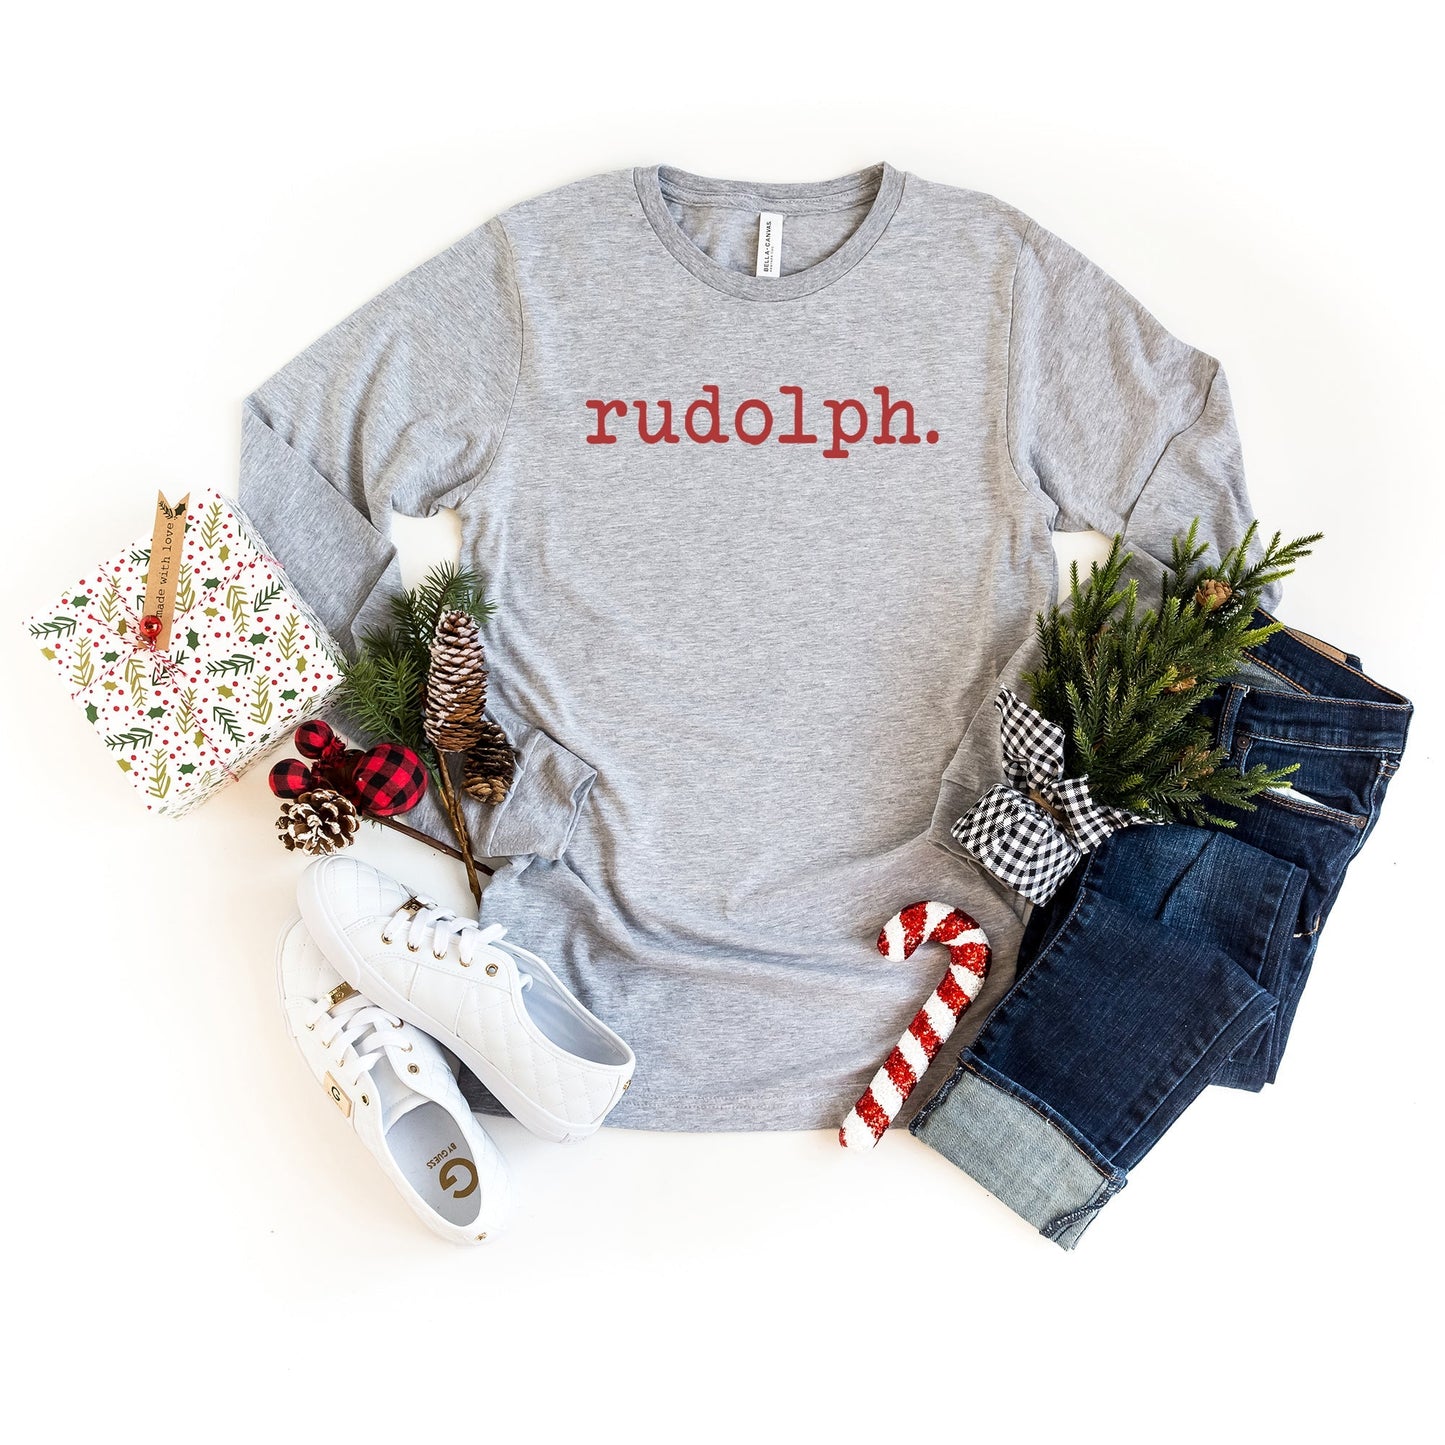 Rudolph - Typewriter | Long Sleeve Crew Neck